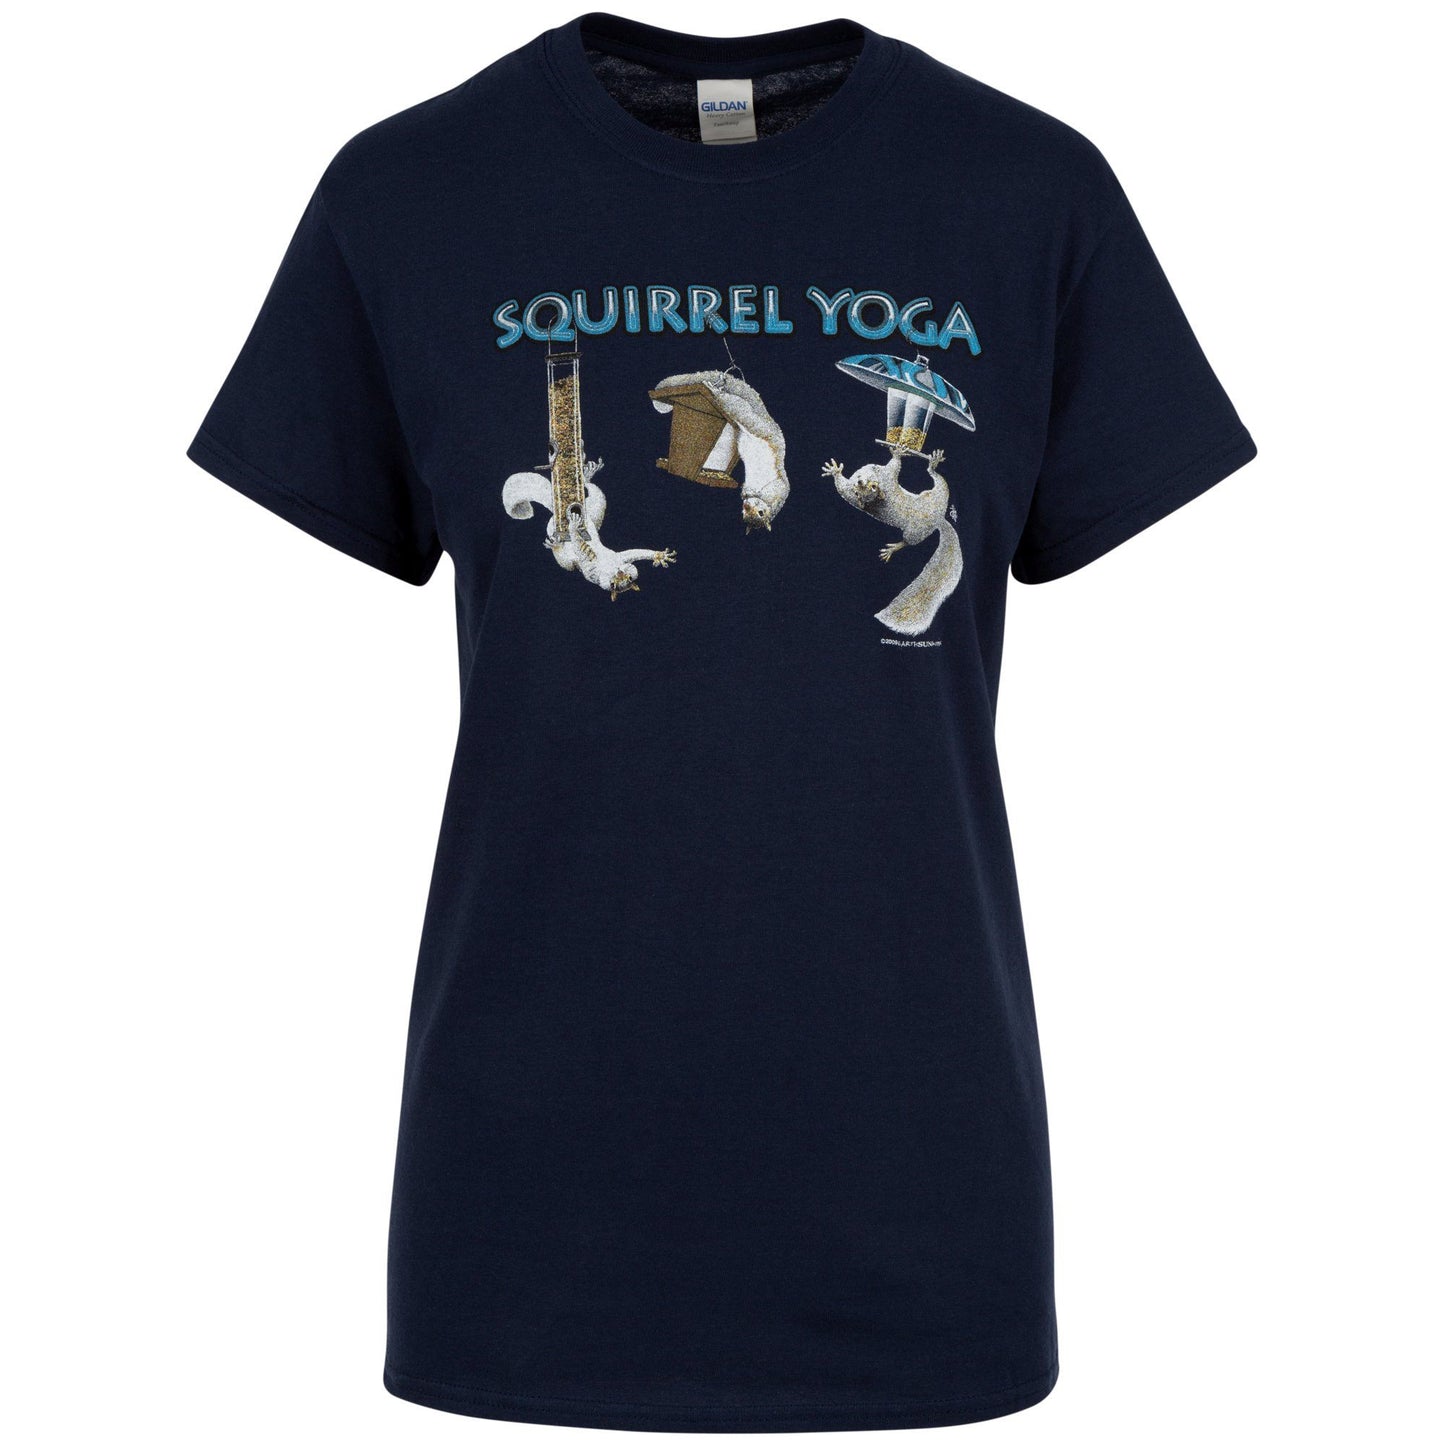 Squirrel Yoga T-Shirt